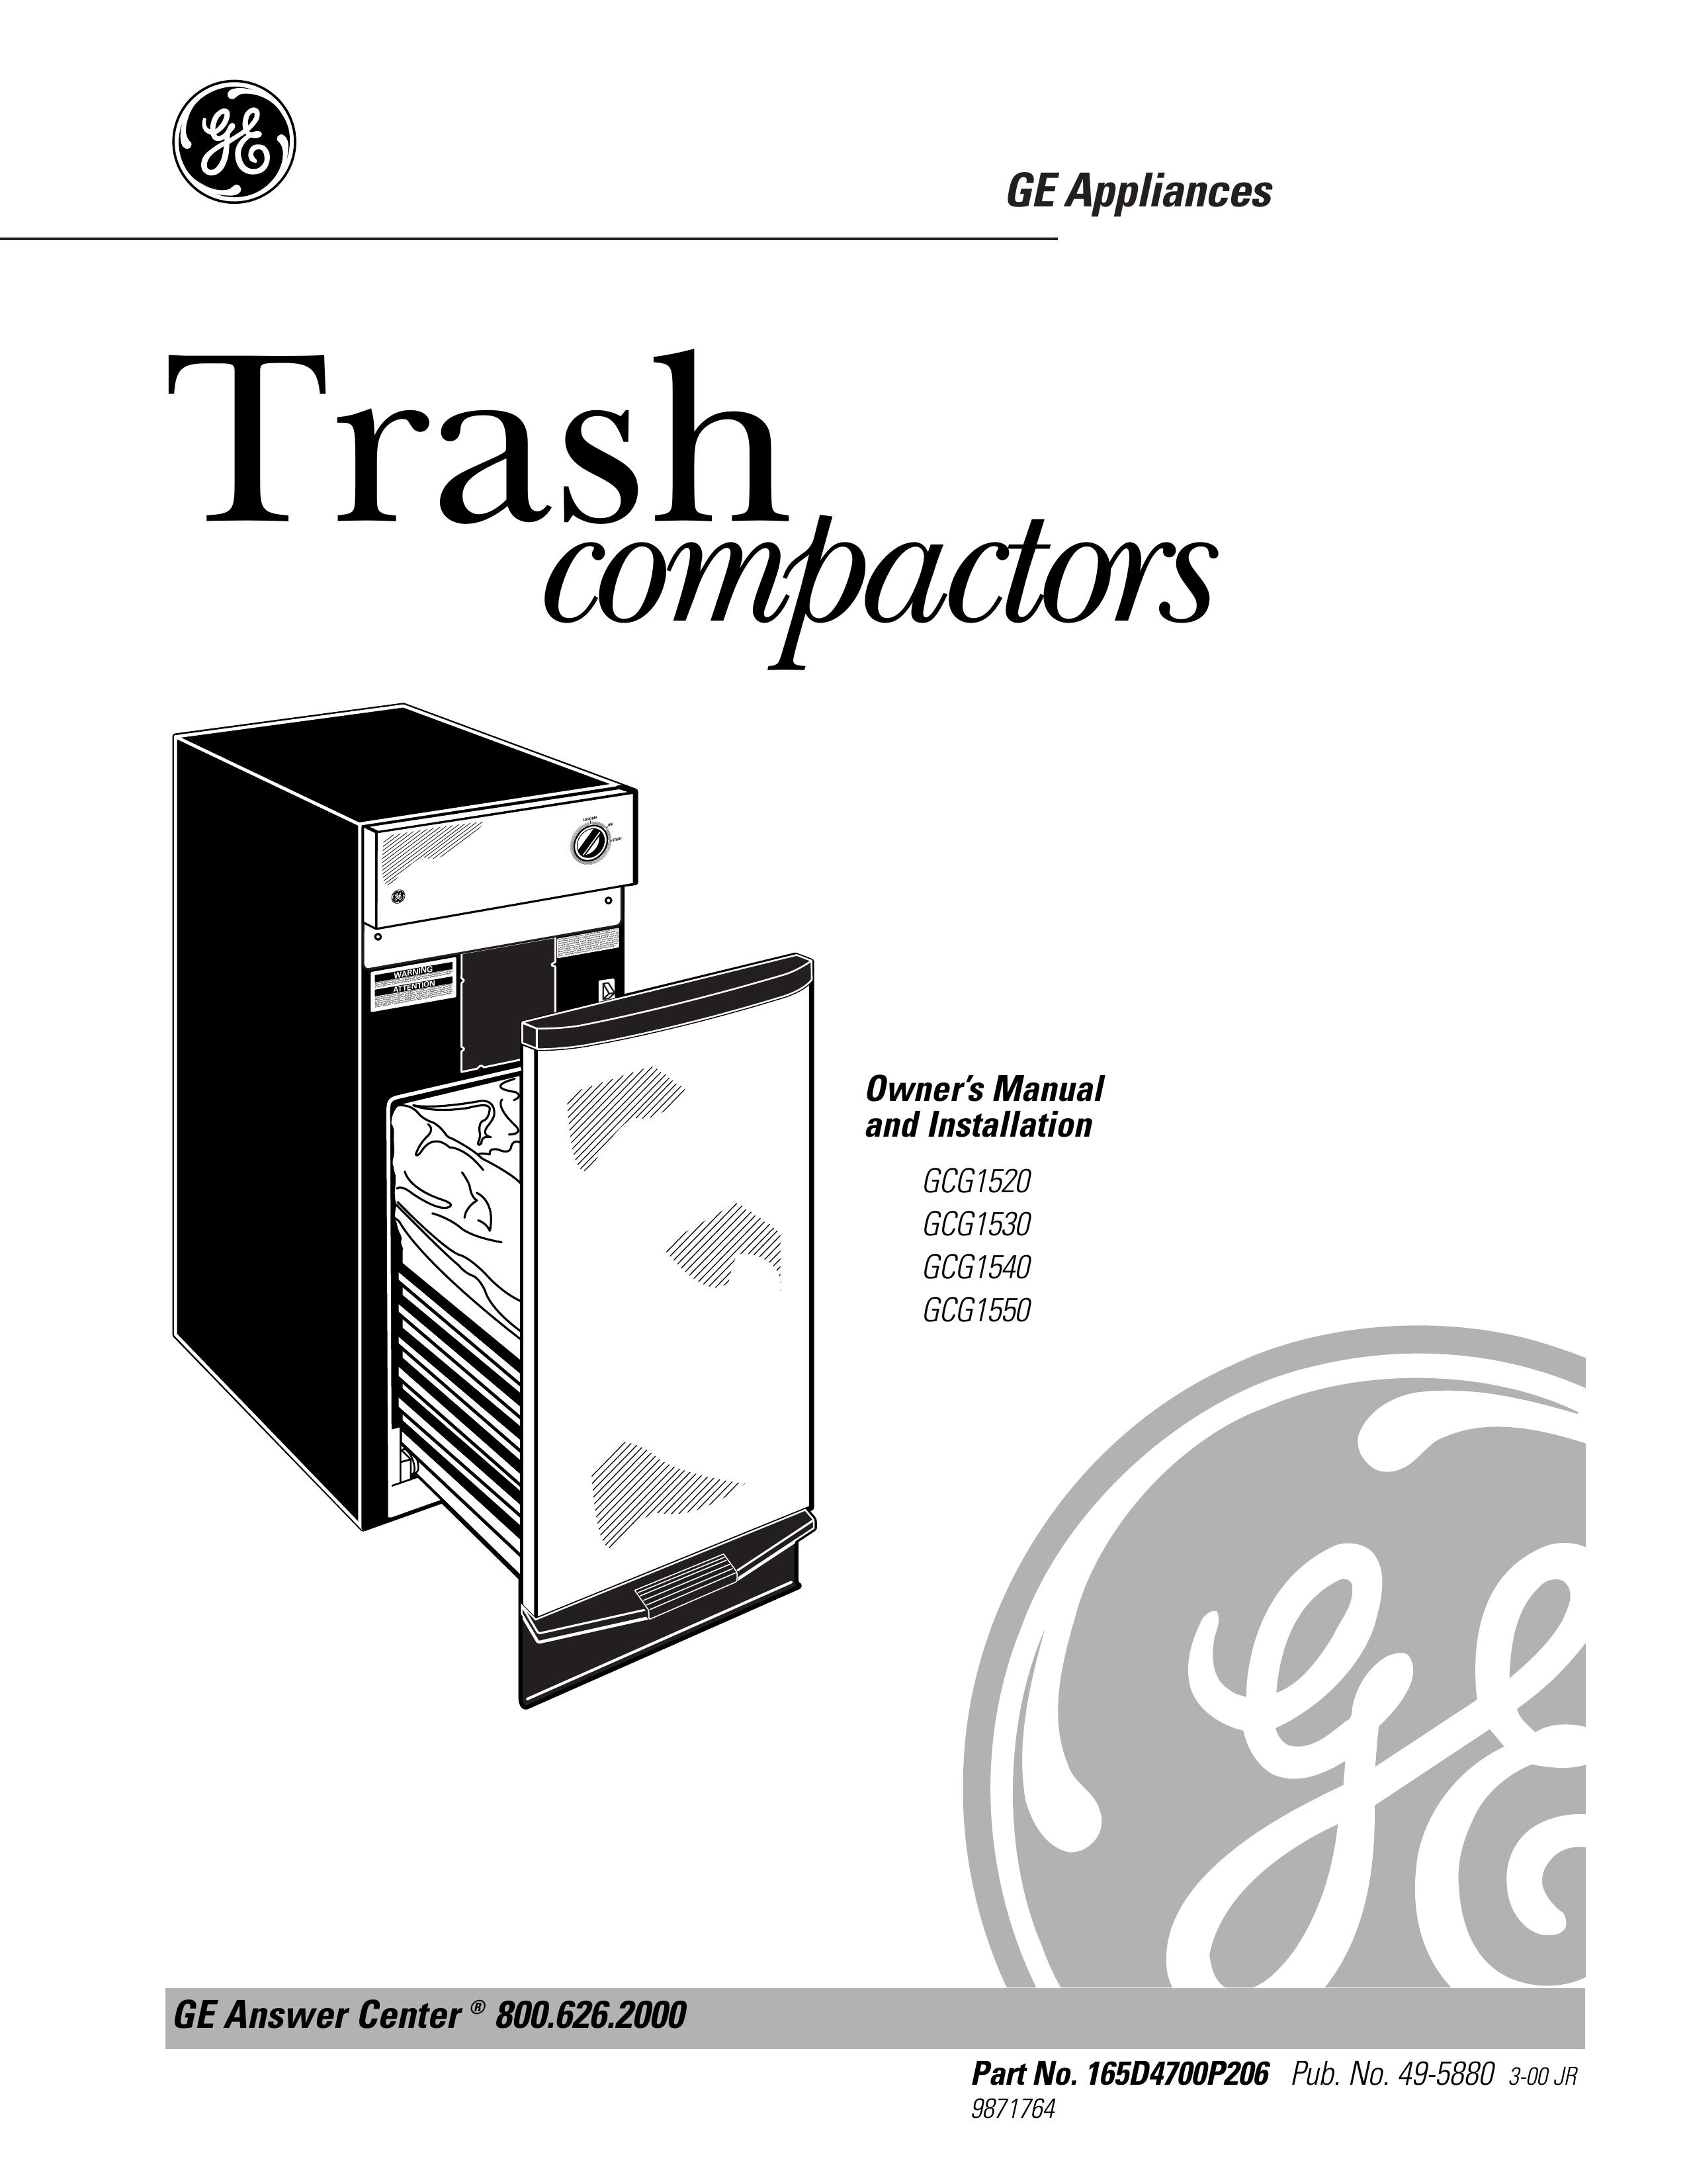 GE GCG1550 Trash Compactor User Manual